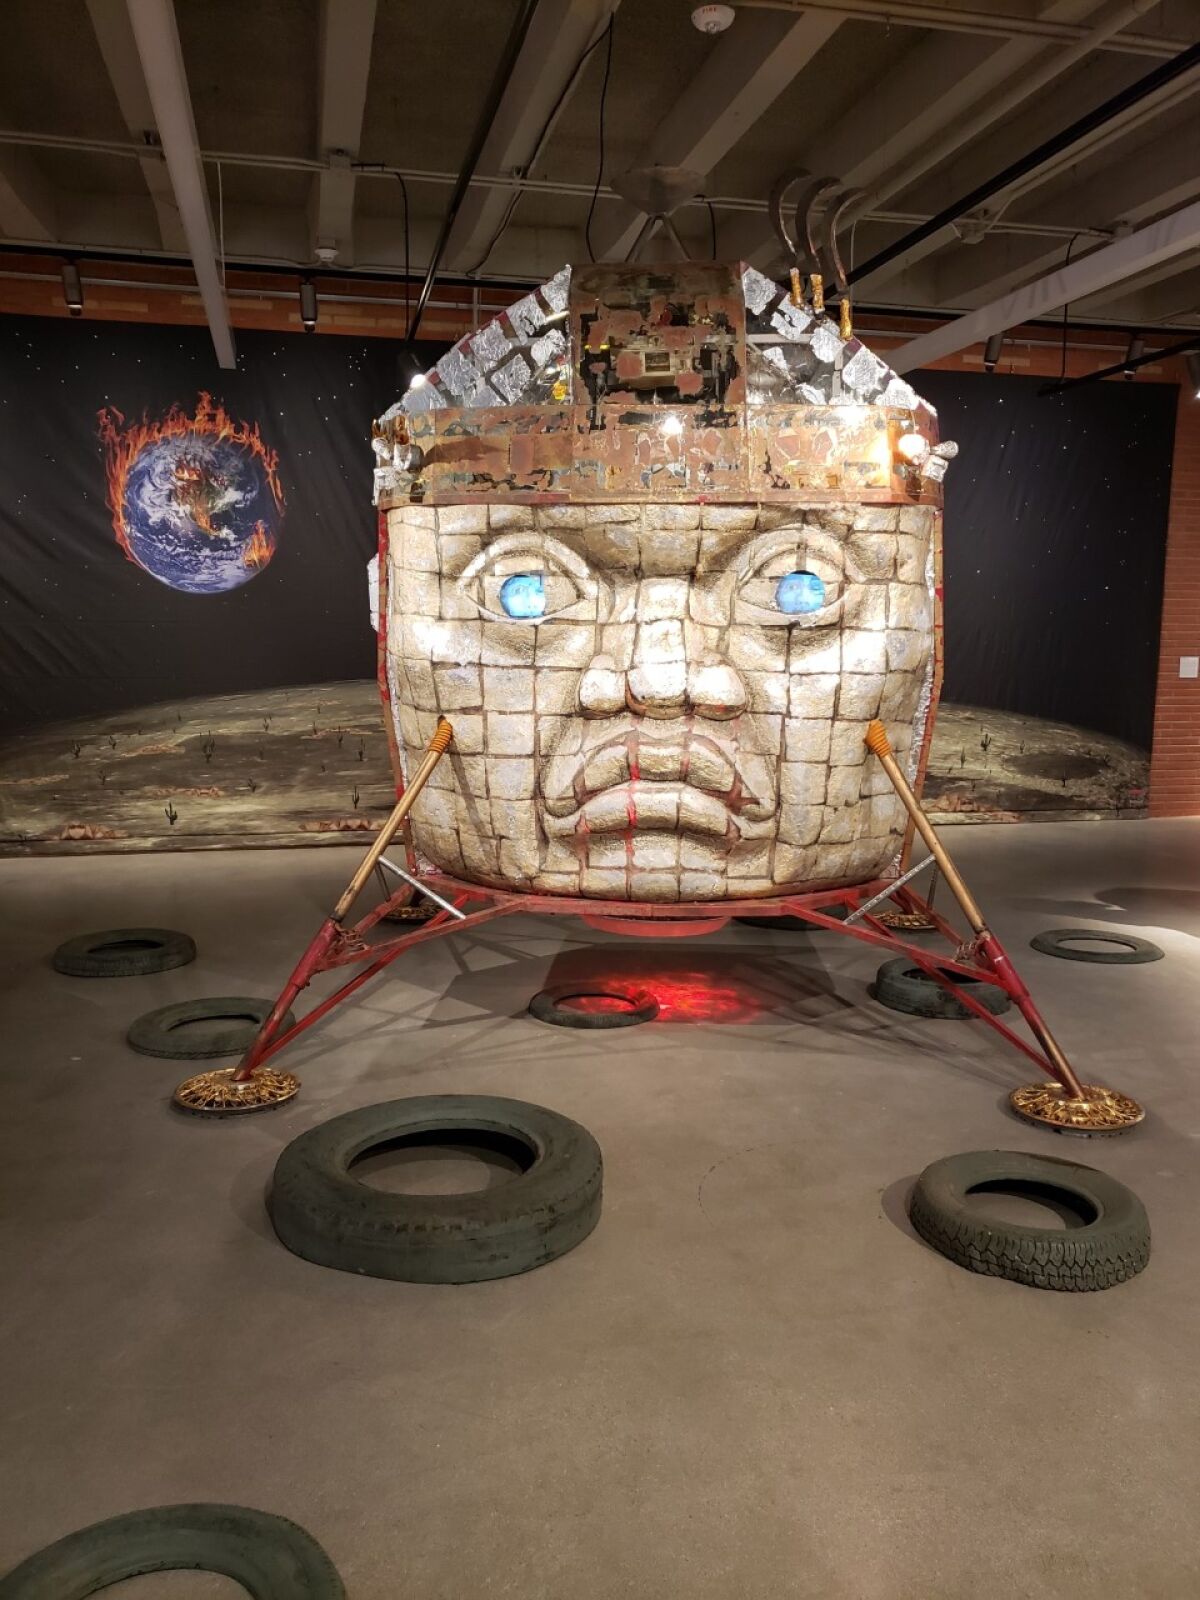 A sculpture of an Olmec head merged with a lunar landing vehicle.